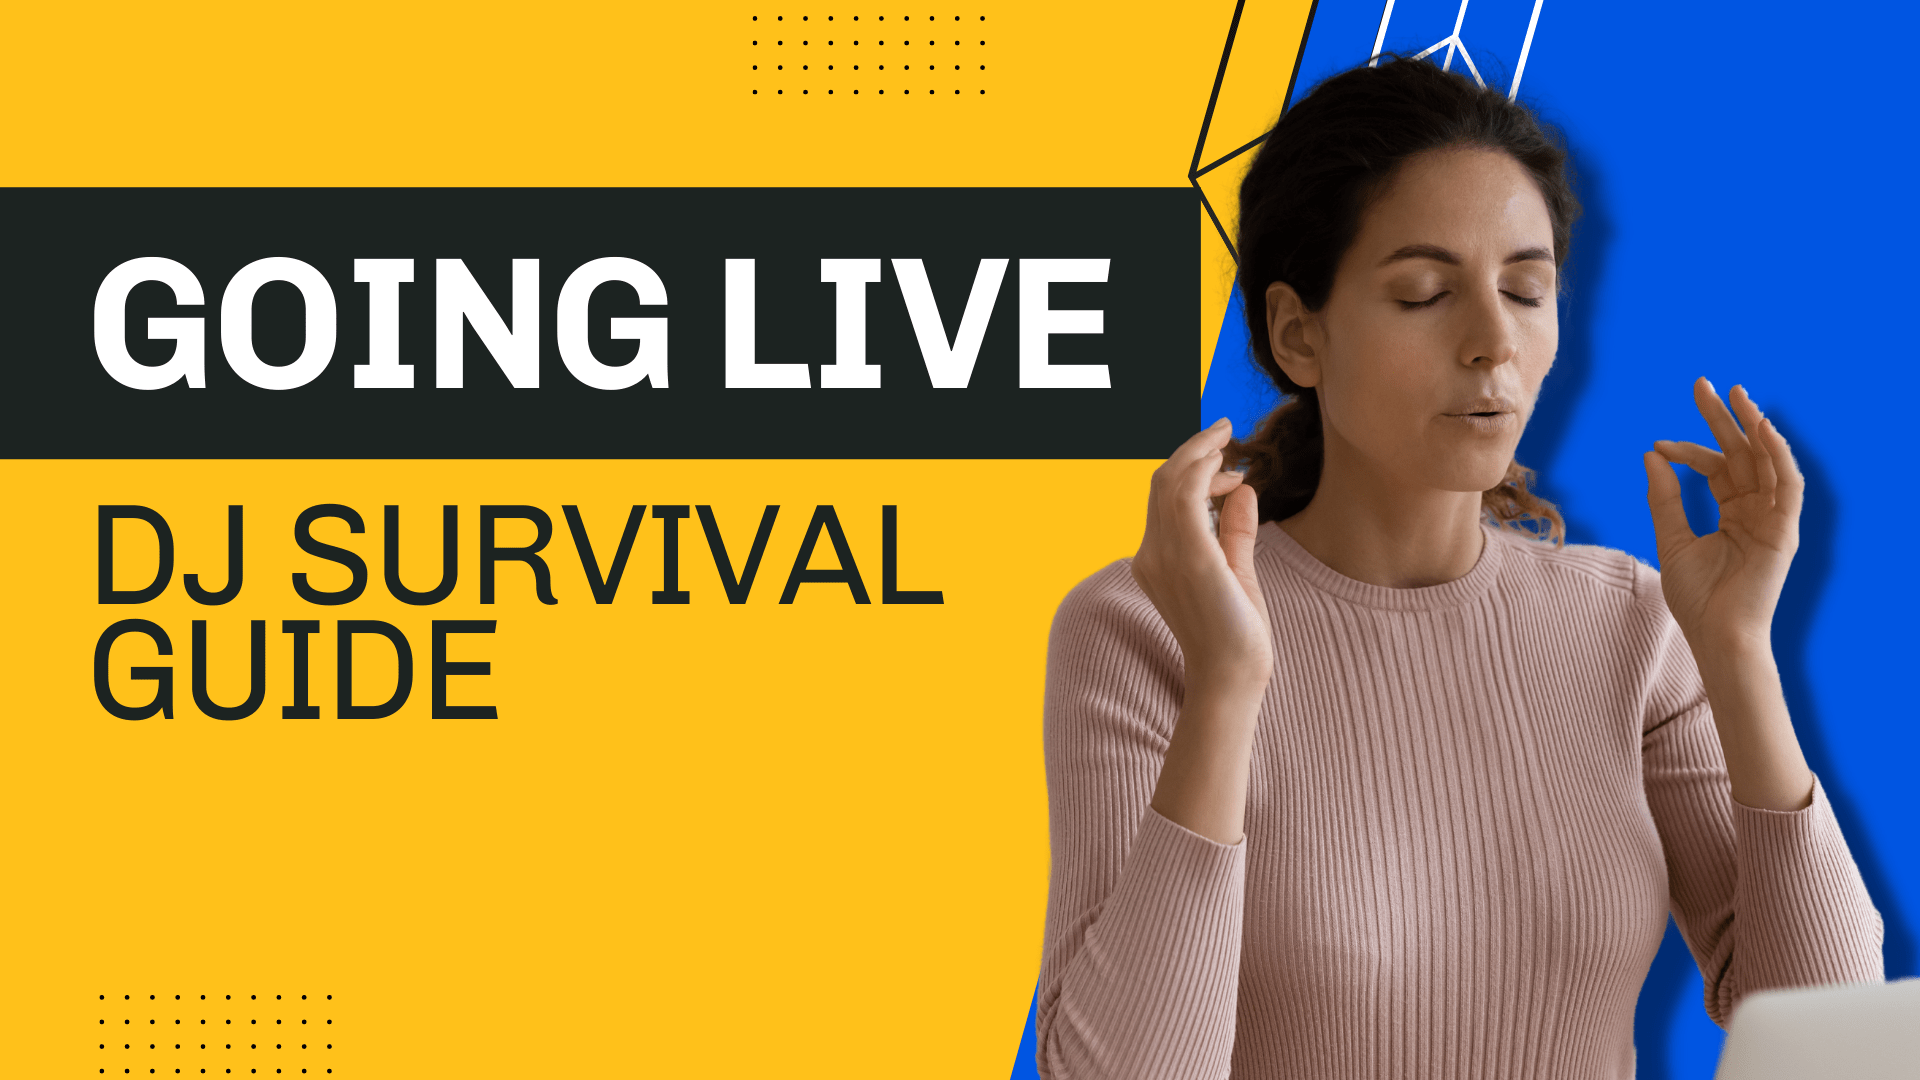 Going Live - DJ Survival Guide